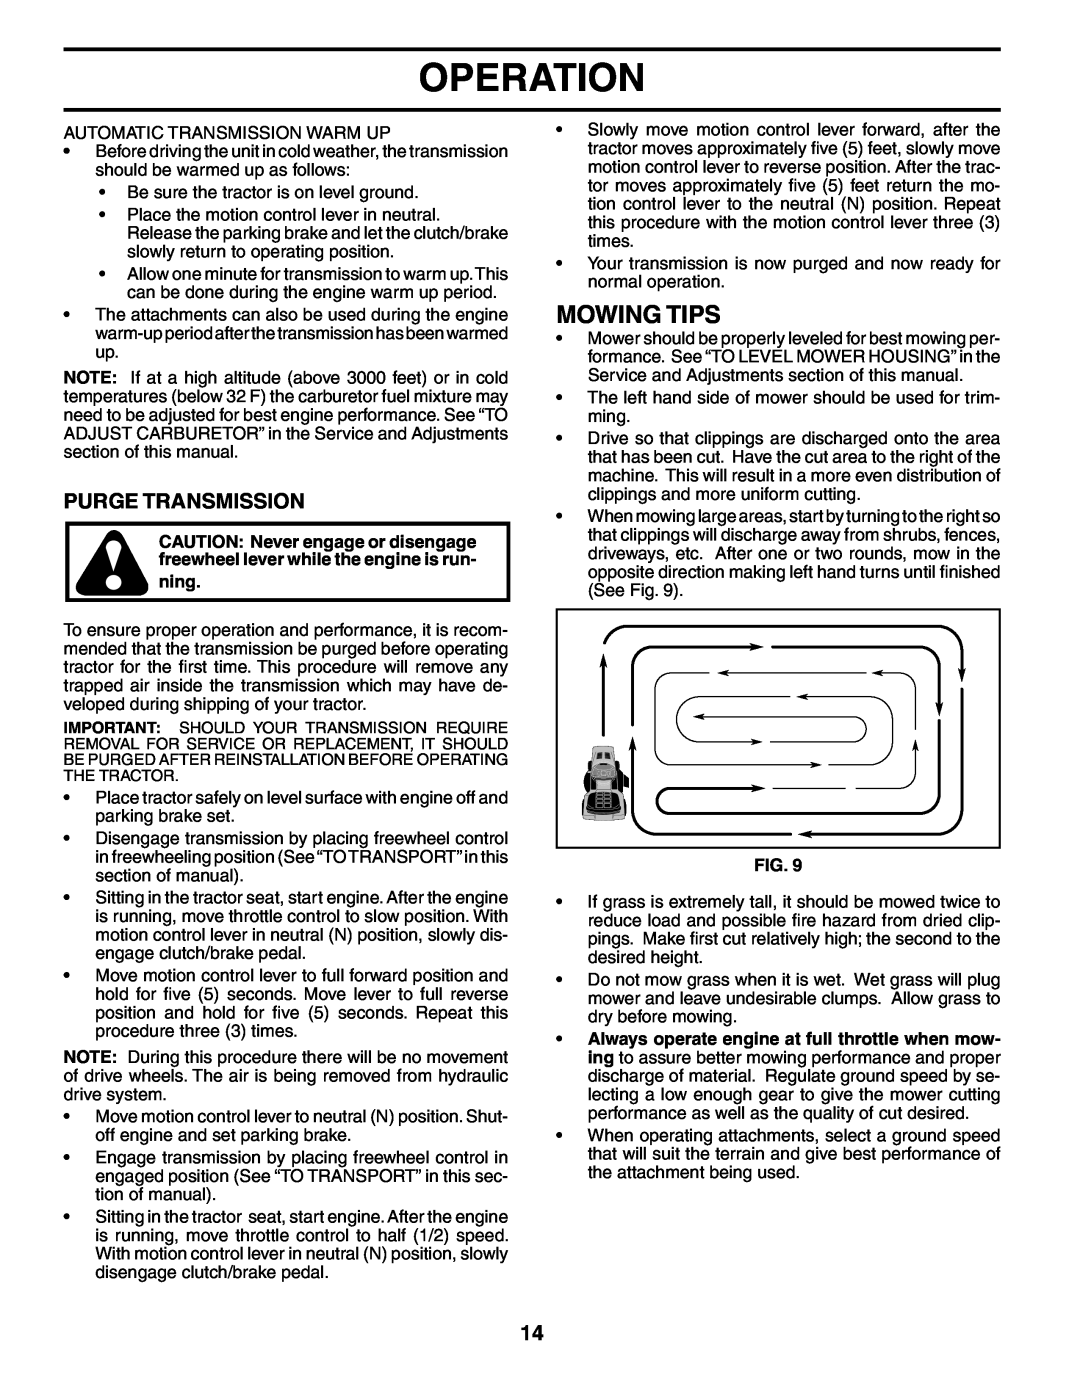 Ryobi 197788 manual Mowing Tips, Purge Transmission, Operation 